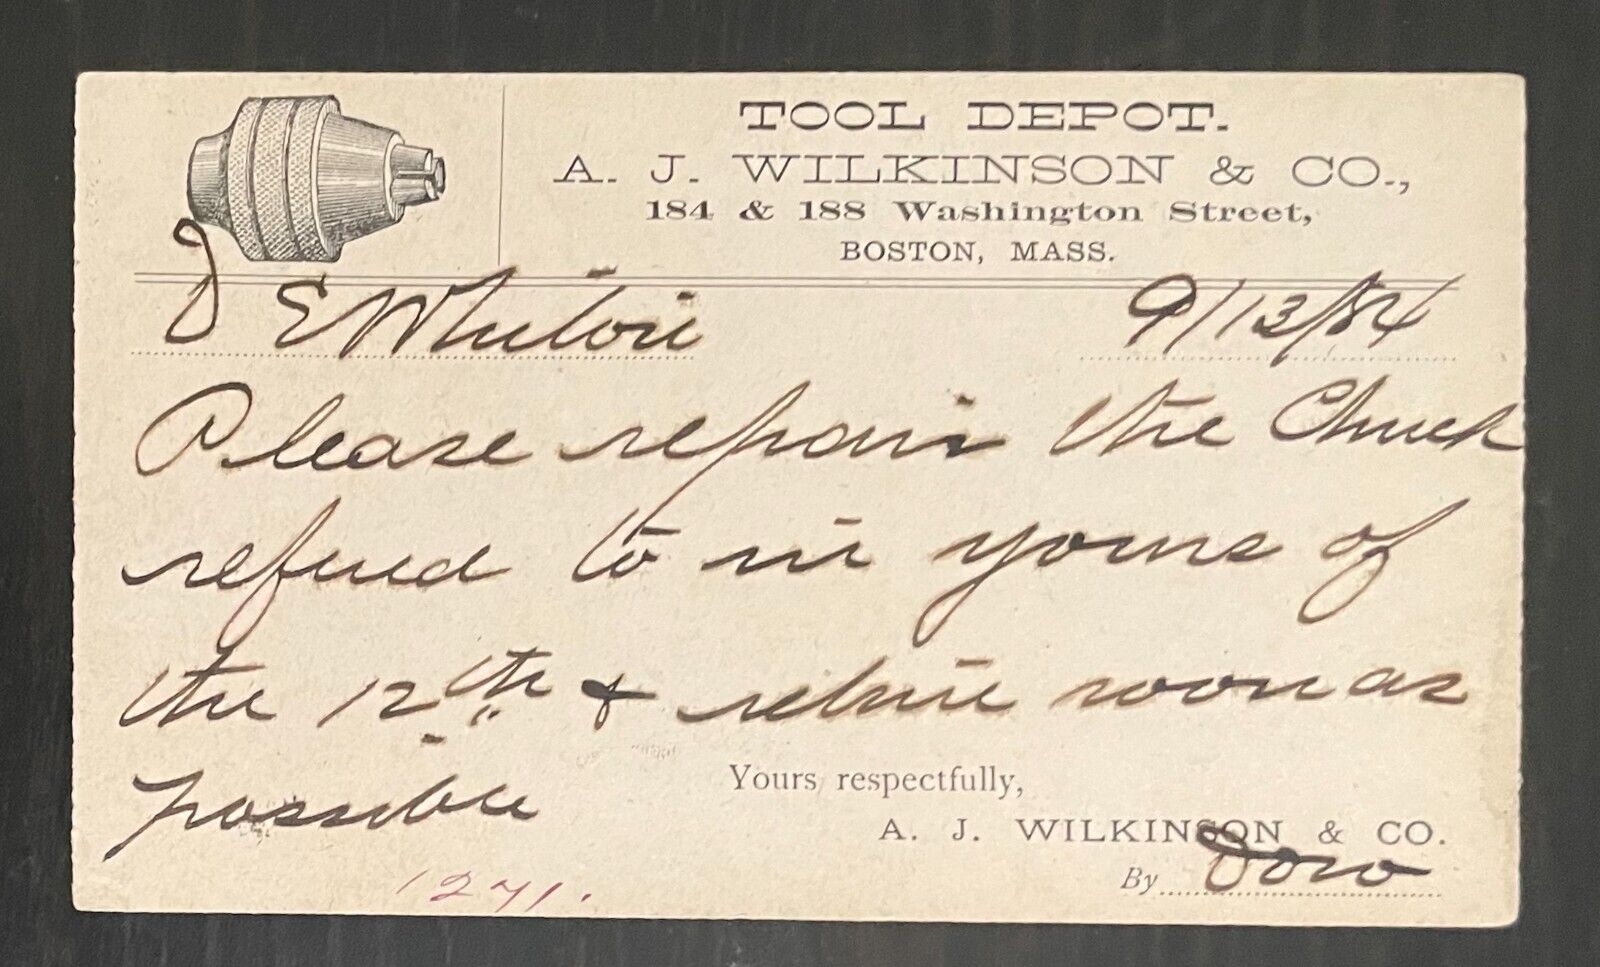 A. J. WILKINSON & CO. TOOL DEPOT - BOSTON, MASS. 1884 BUSINESS POSTCARD